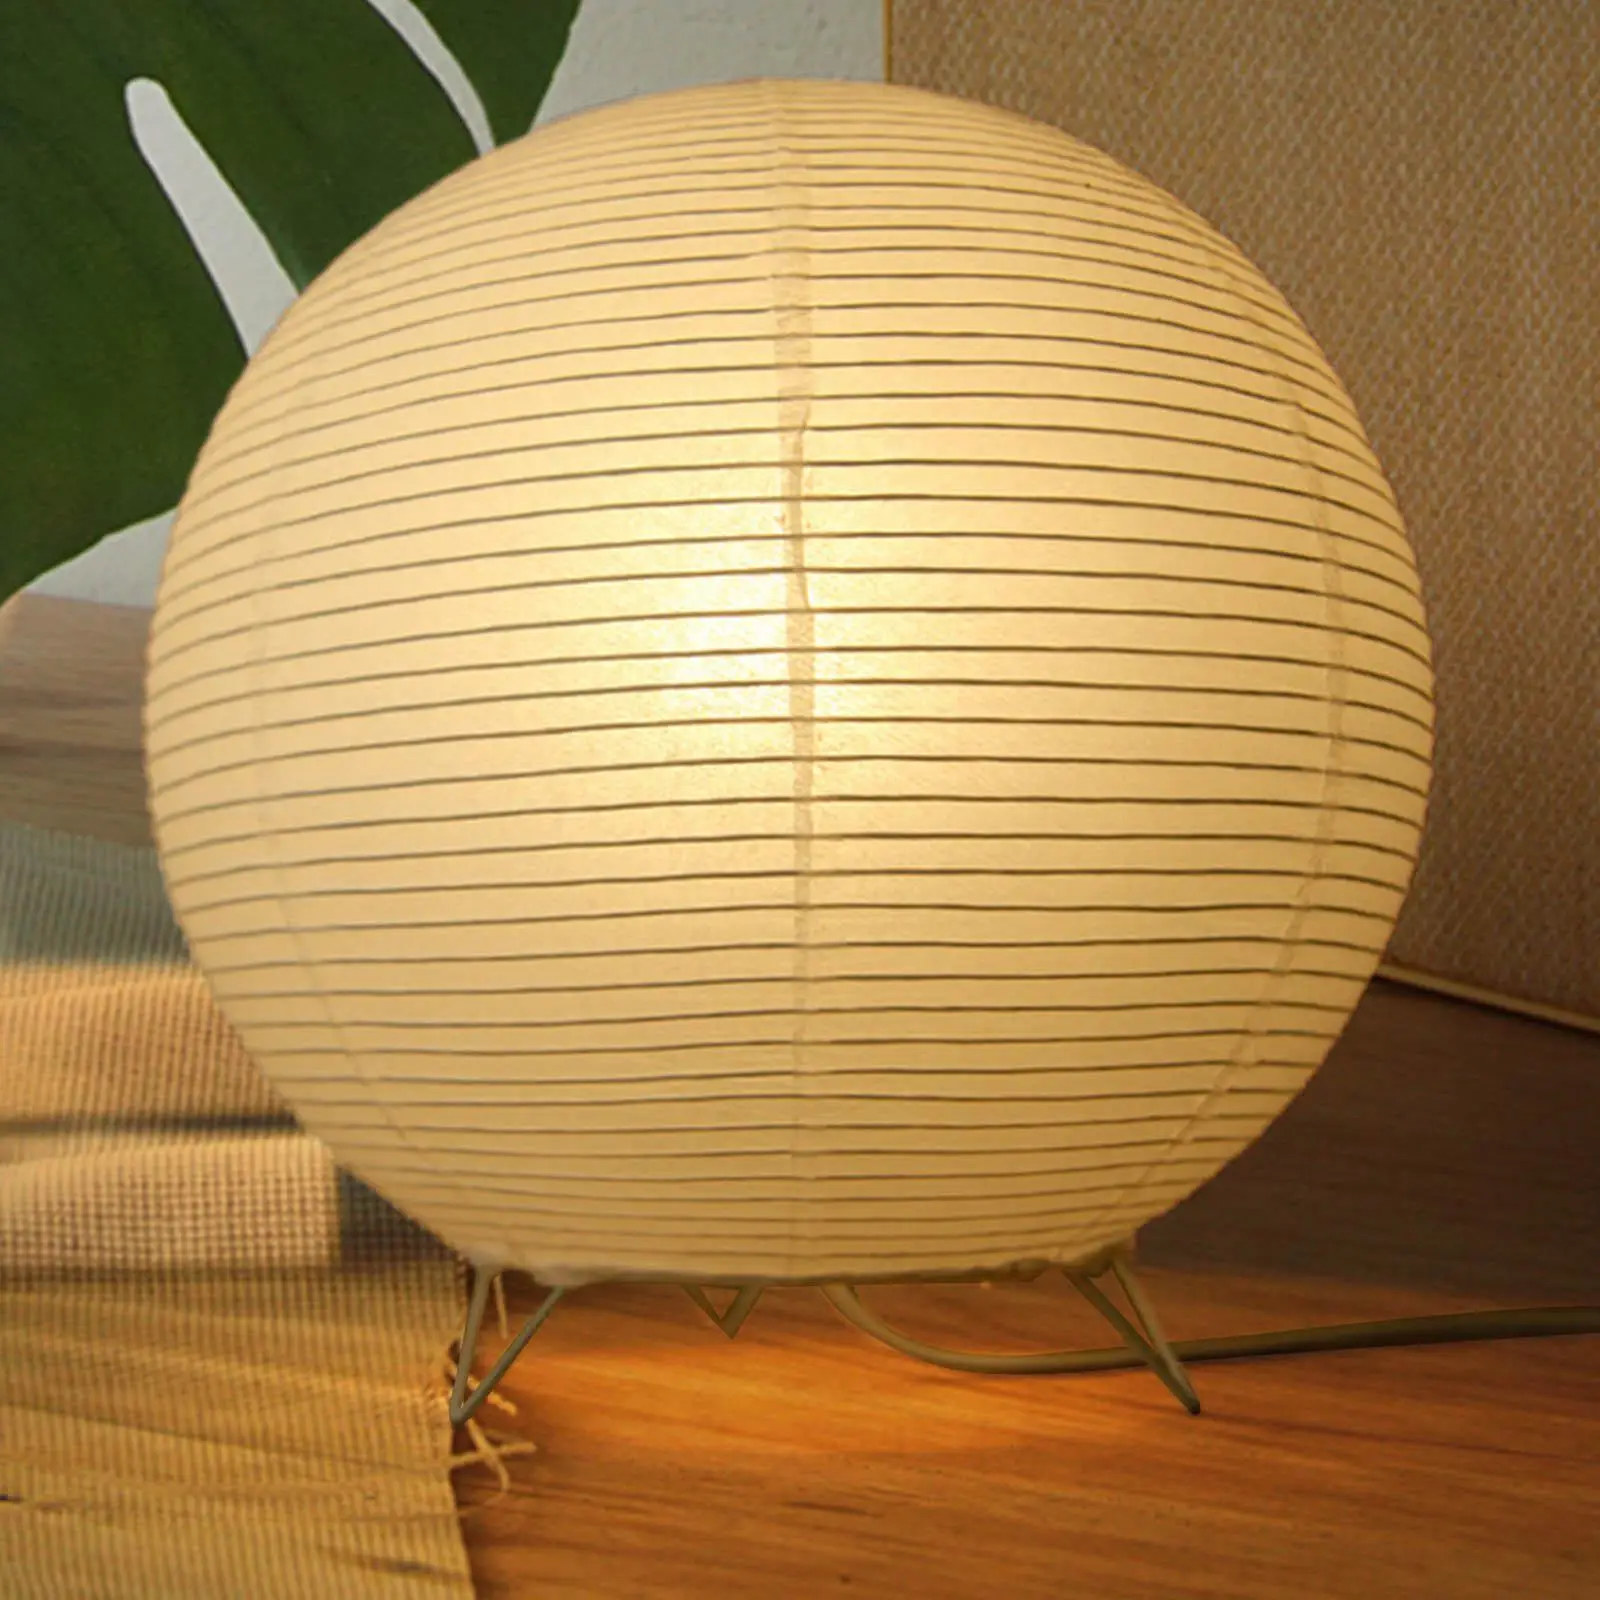 Paper Lantern Table Lamp Creative Paper Lamp Lantern Lamp Desk Light Standing Lamp for Bedside Dresser Office Home Decor